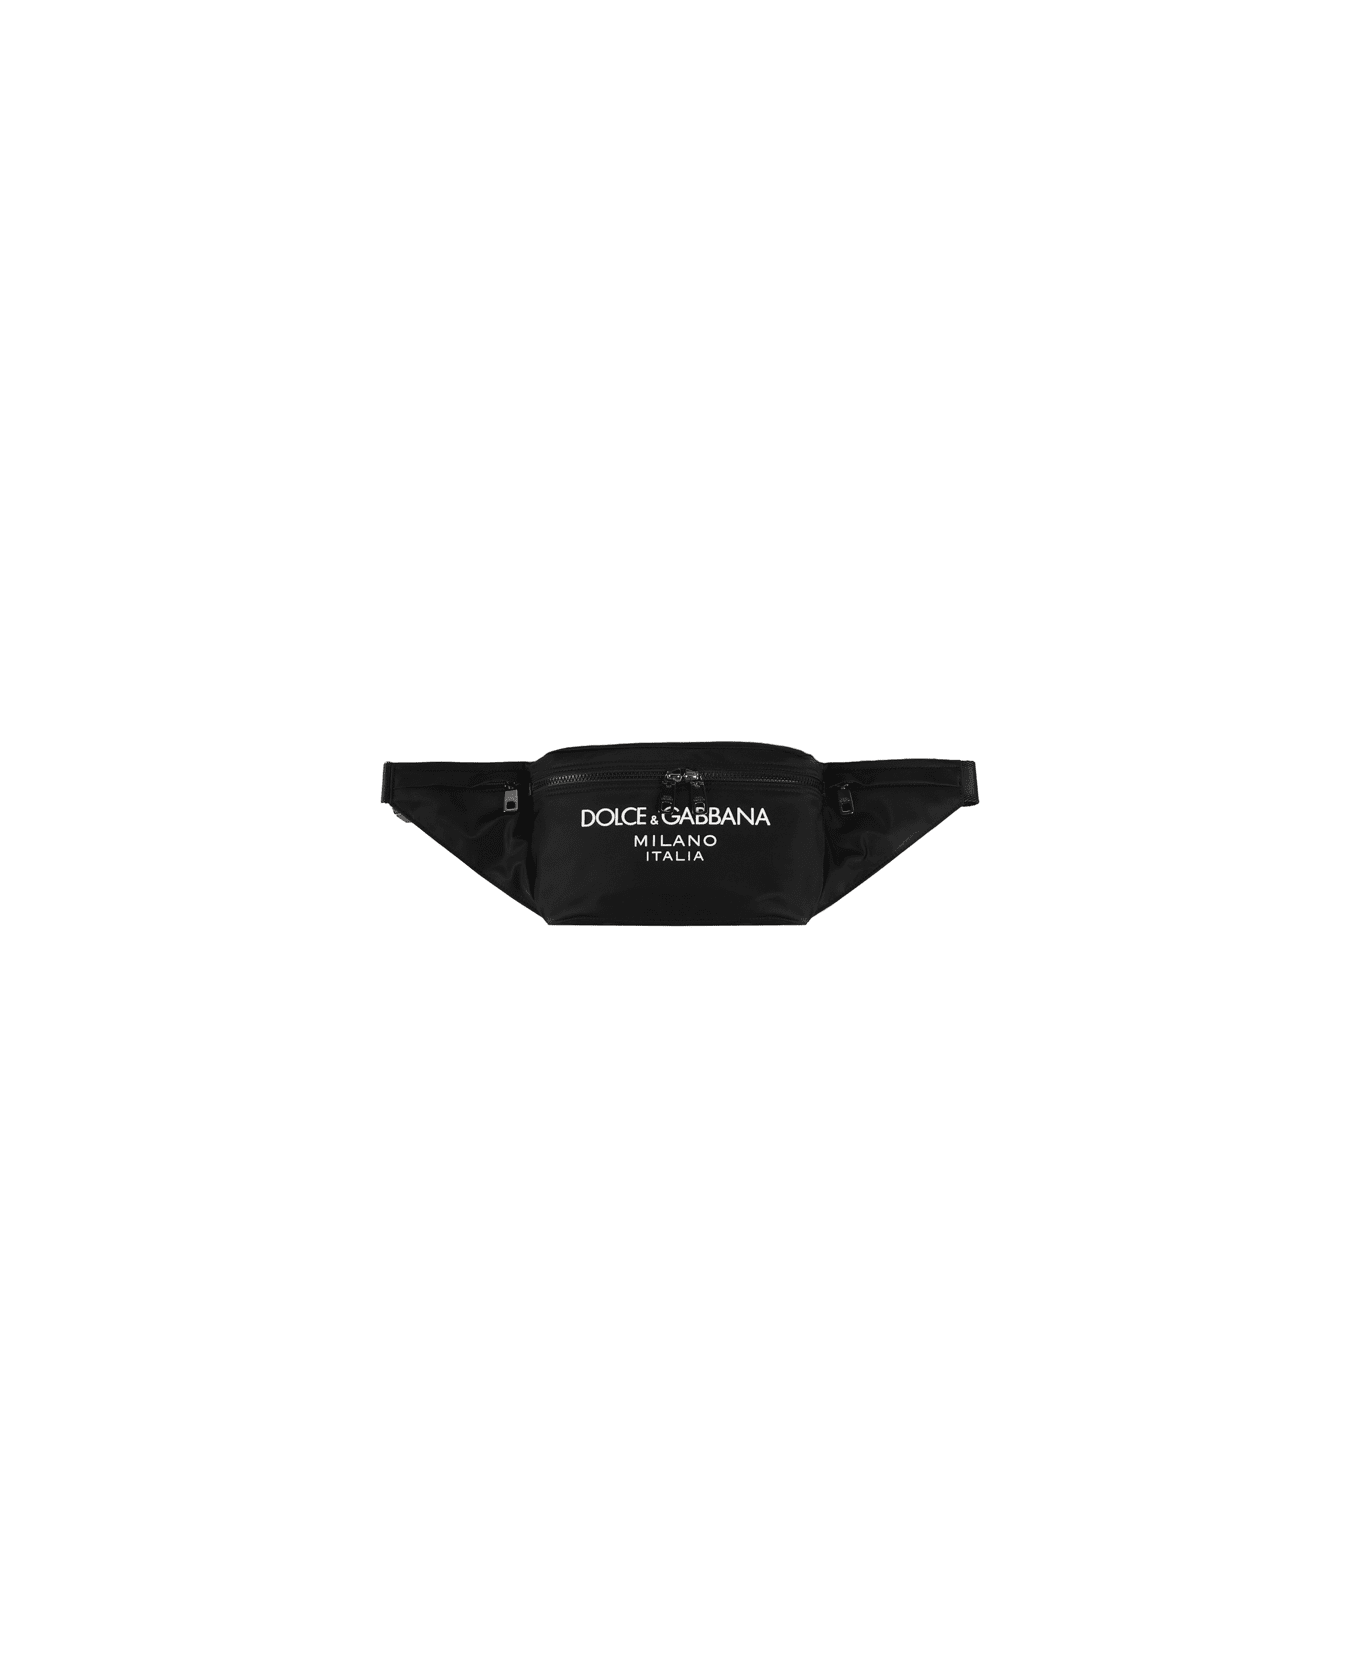 Dolce & Gabbana Nylon Belt Bag - Nero/nero